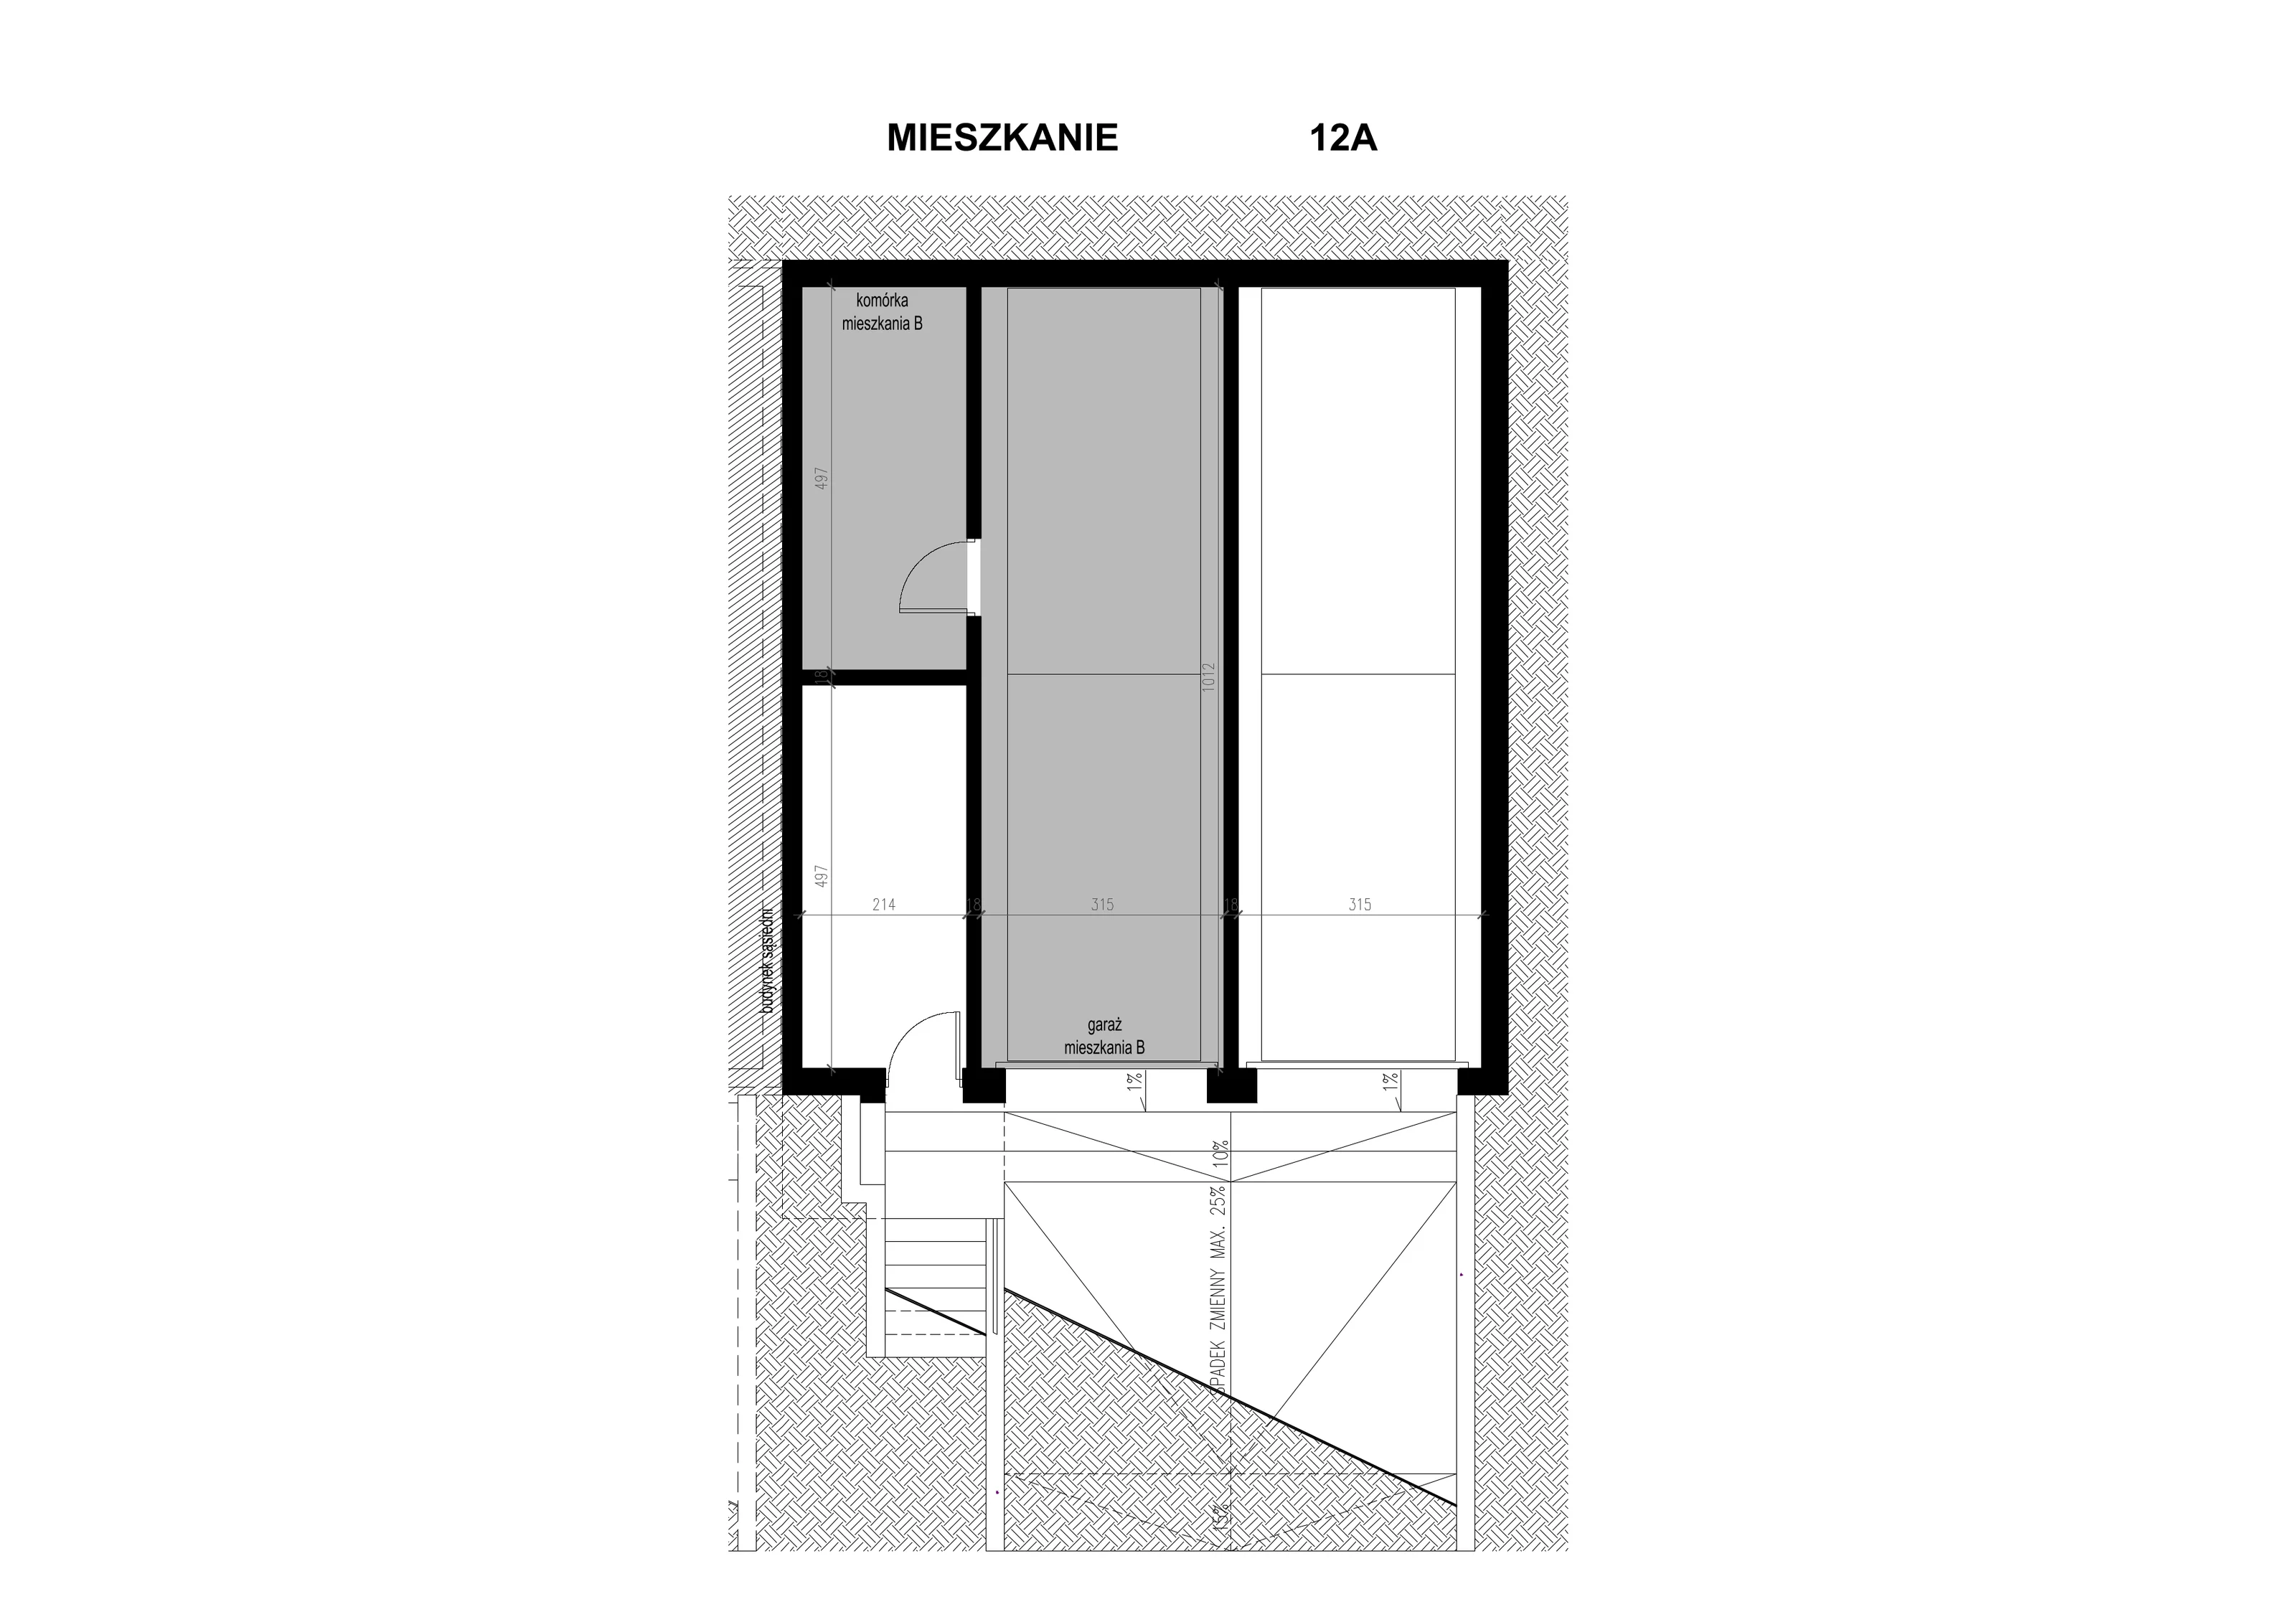 Apartament 80,15 m², parter, oferta nr 1.12A, Osiedle BO, Wrocław, Kowale, ul. Bociana